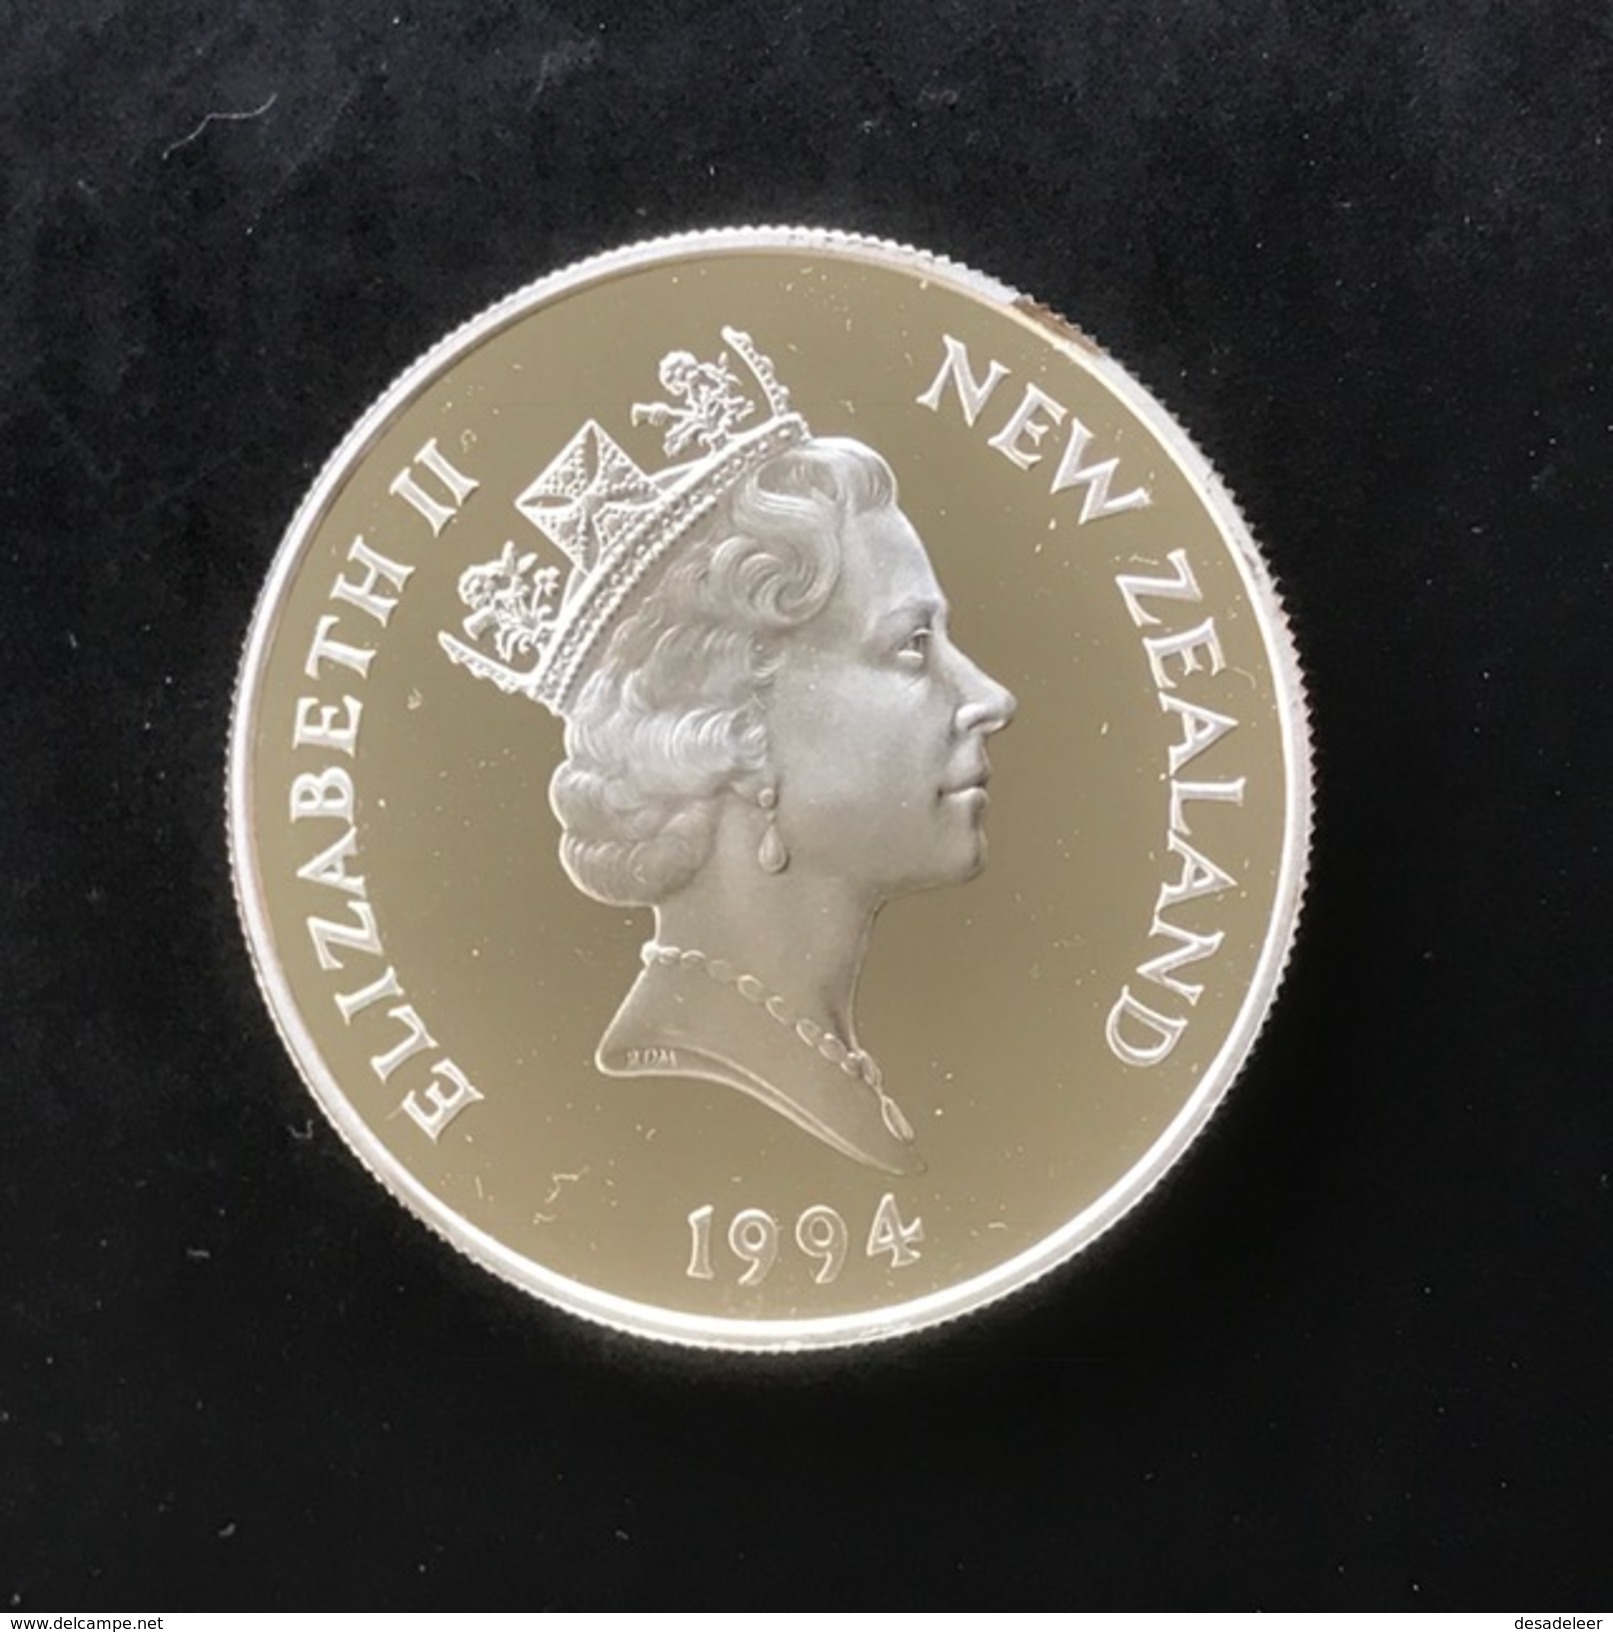 New Zealand 5 Dollar 1994 (Proof) - Winter Olympics - New Zealand